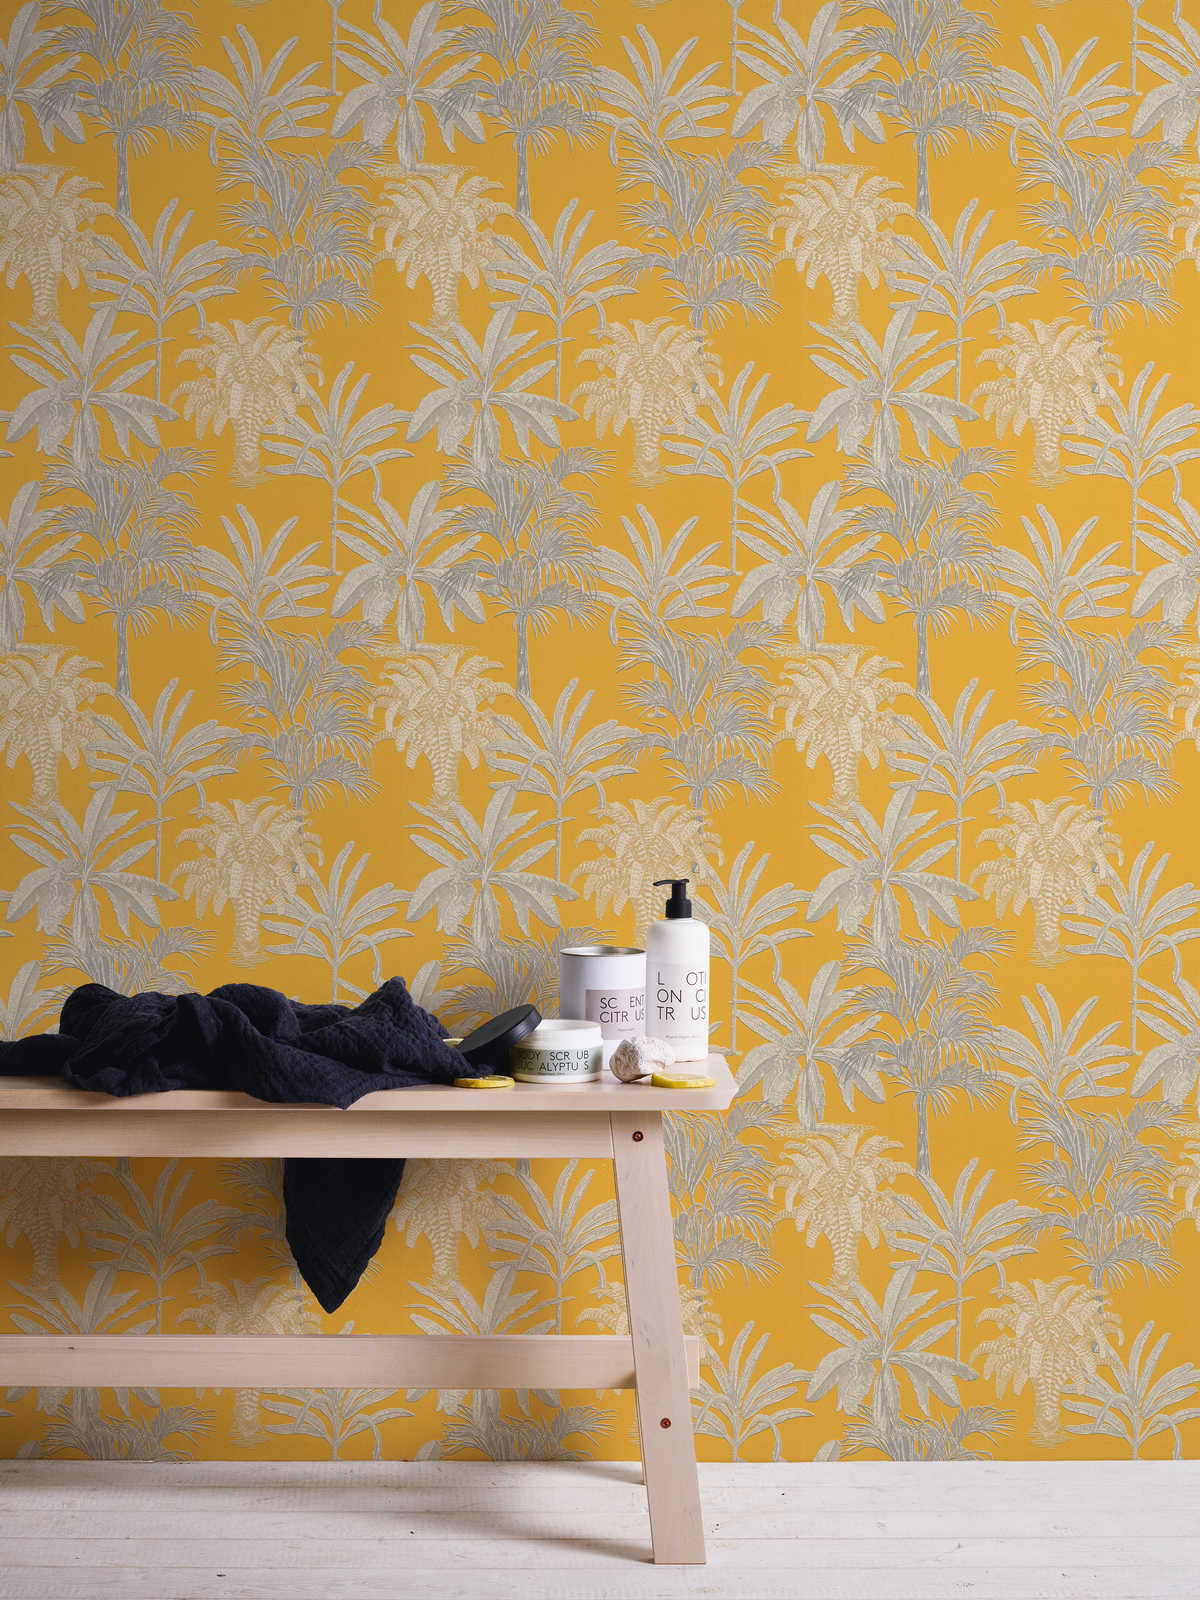             Palmen Tapete Senfgelb mit Strukturmuster – Gelb, Grau
        